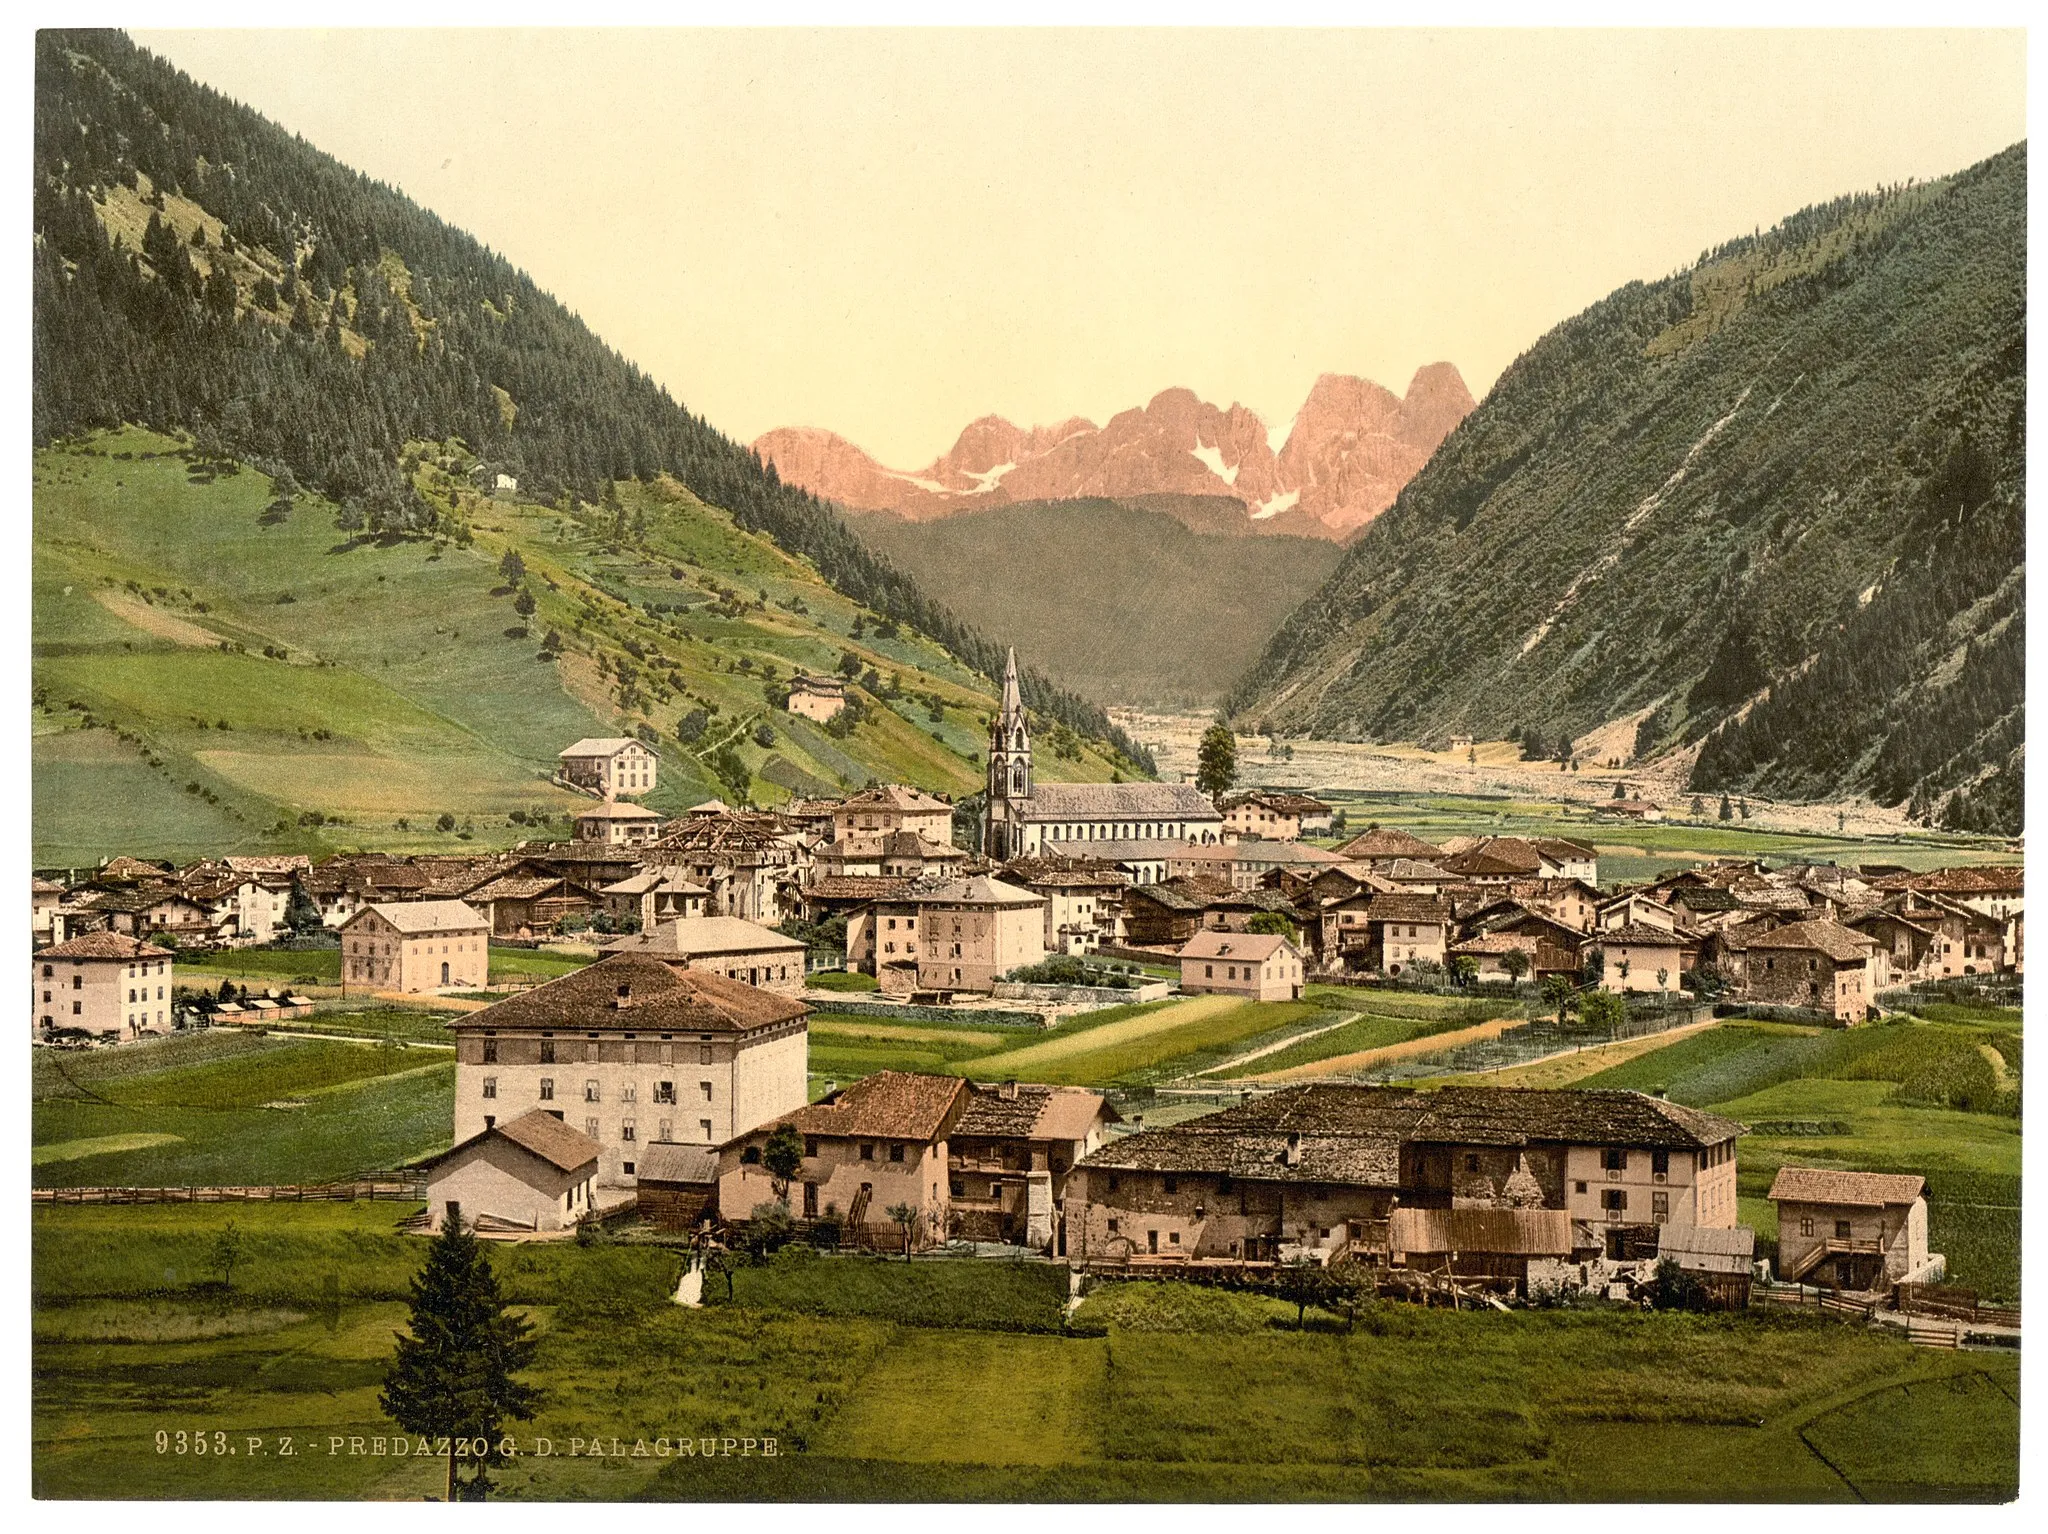 Bild av Provincia Autonoma di Trento